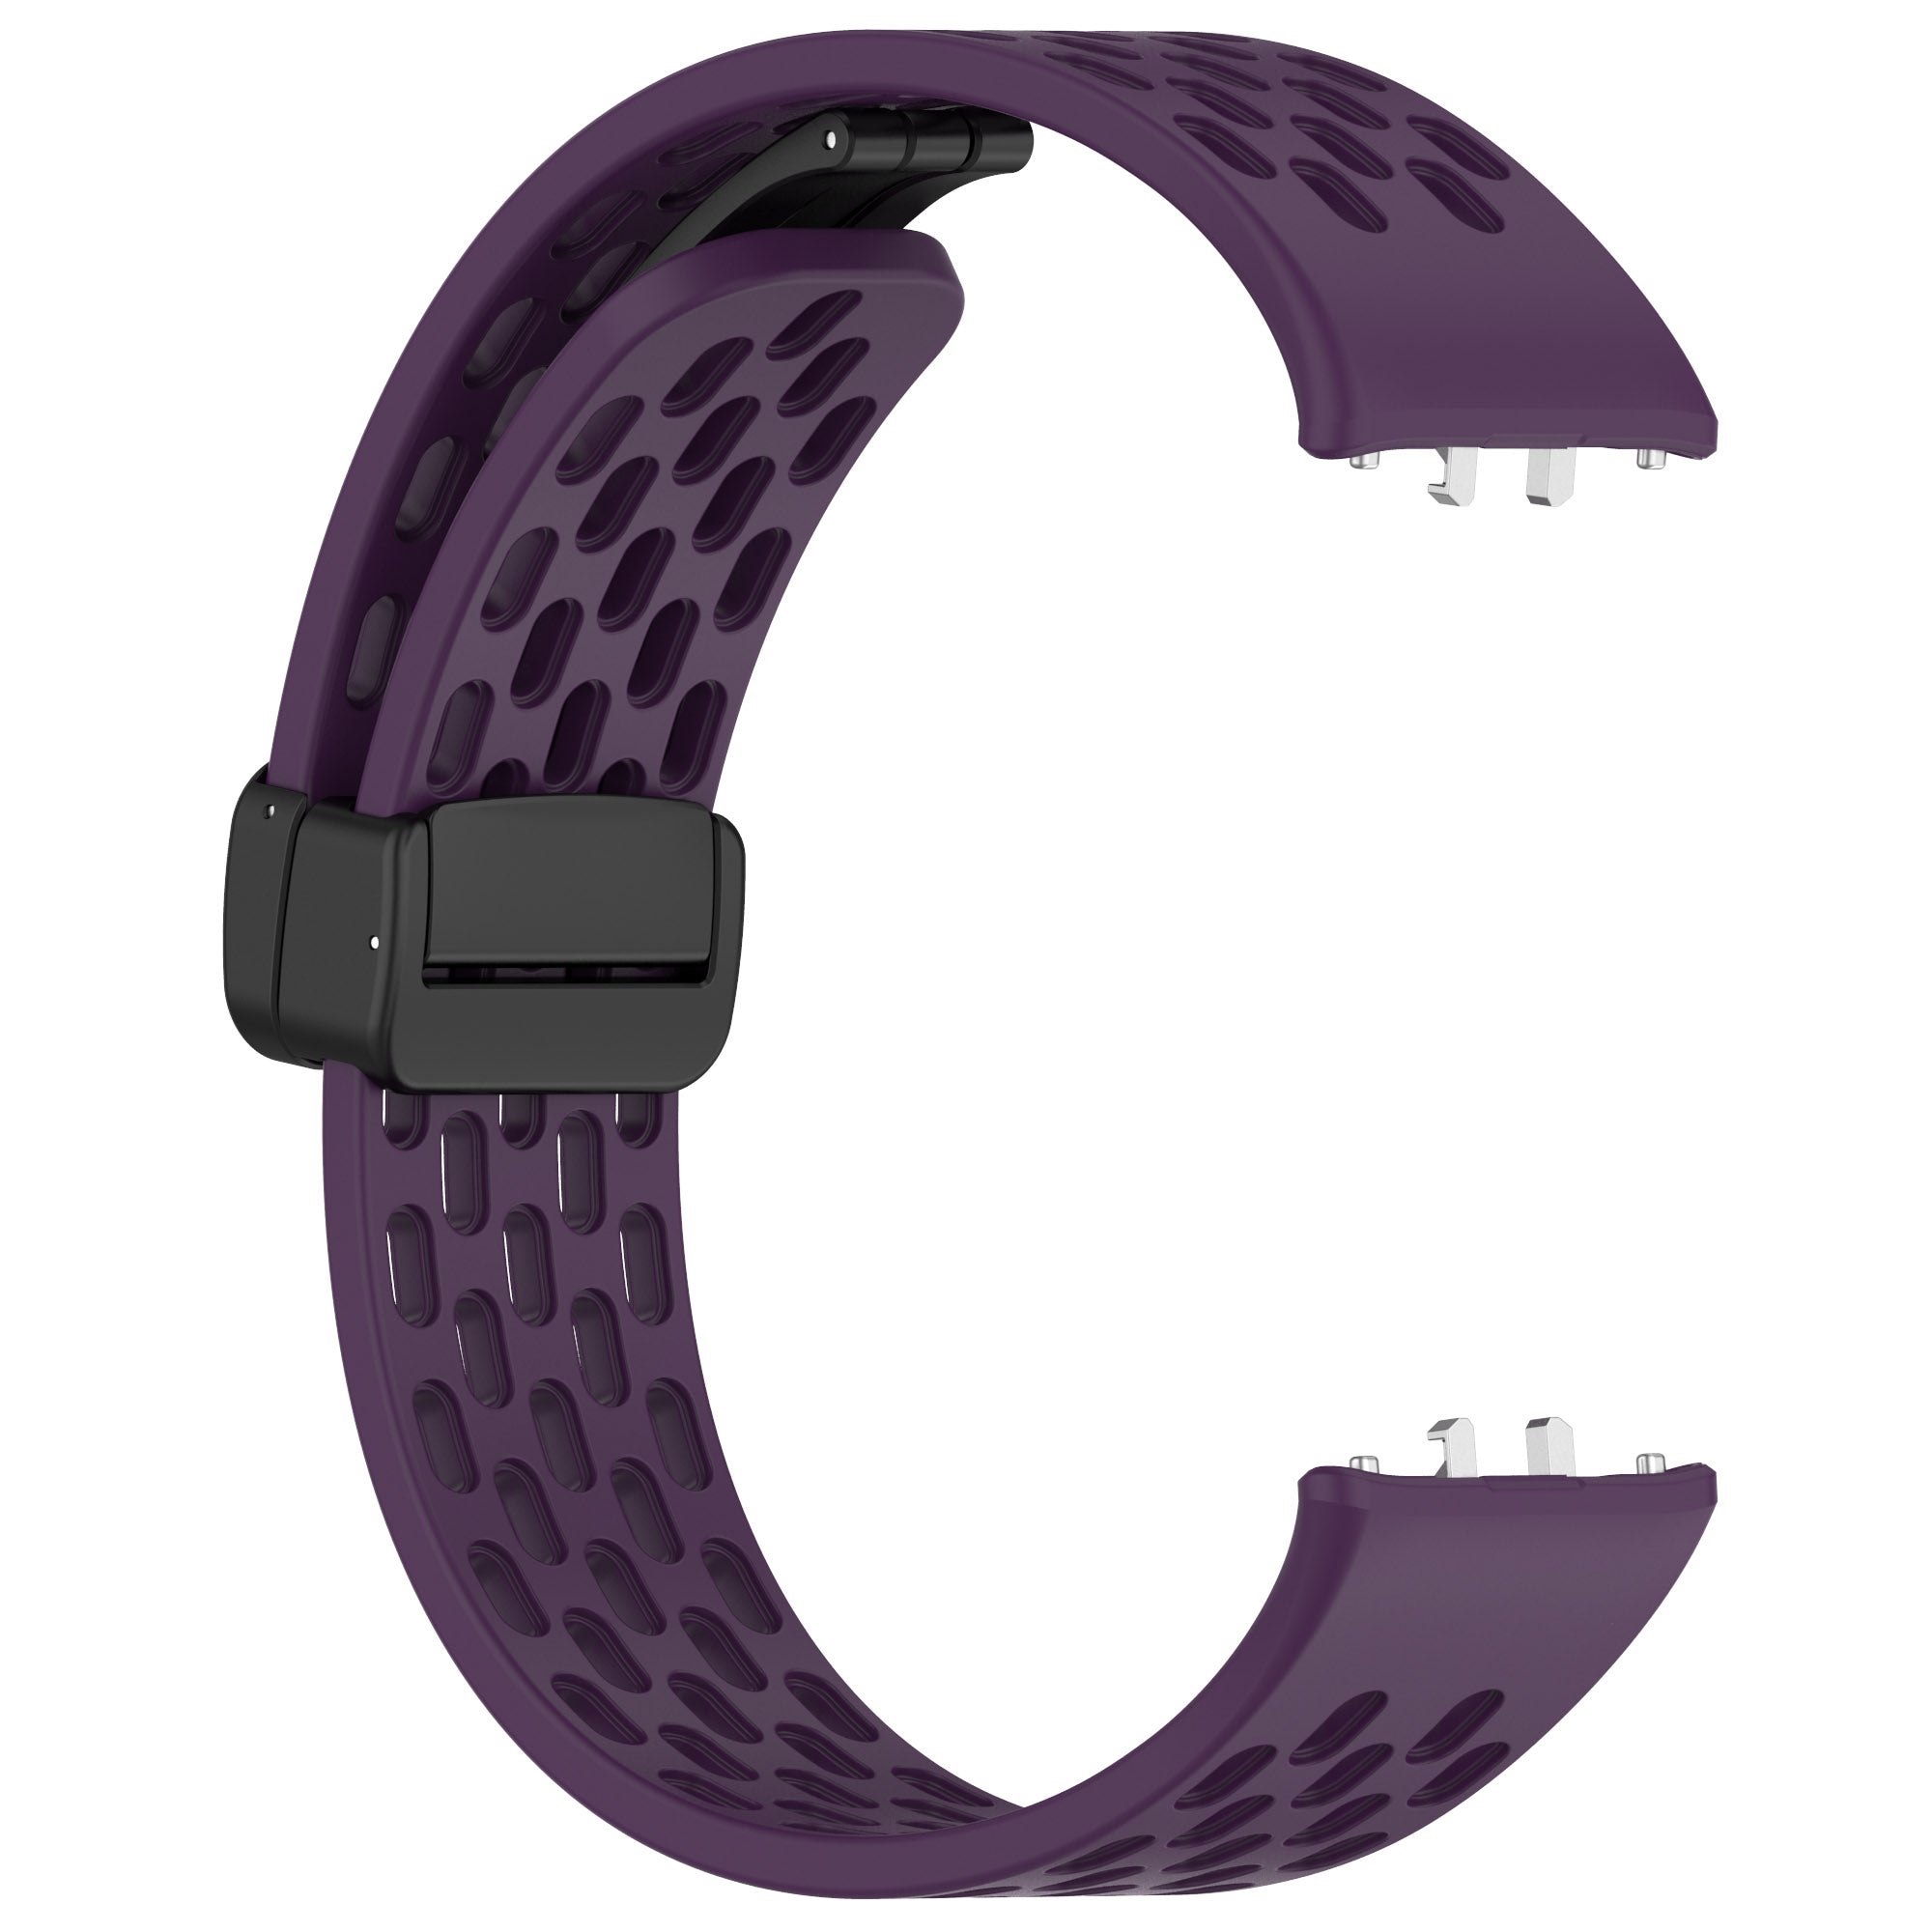 Wrist Band for Samsung Galaxy Fit3 R930 Magnetic Silicone Smartwatch Bracelet Strap - Dark Purple